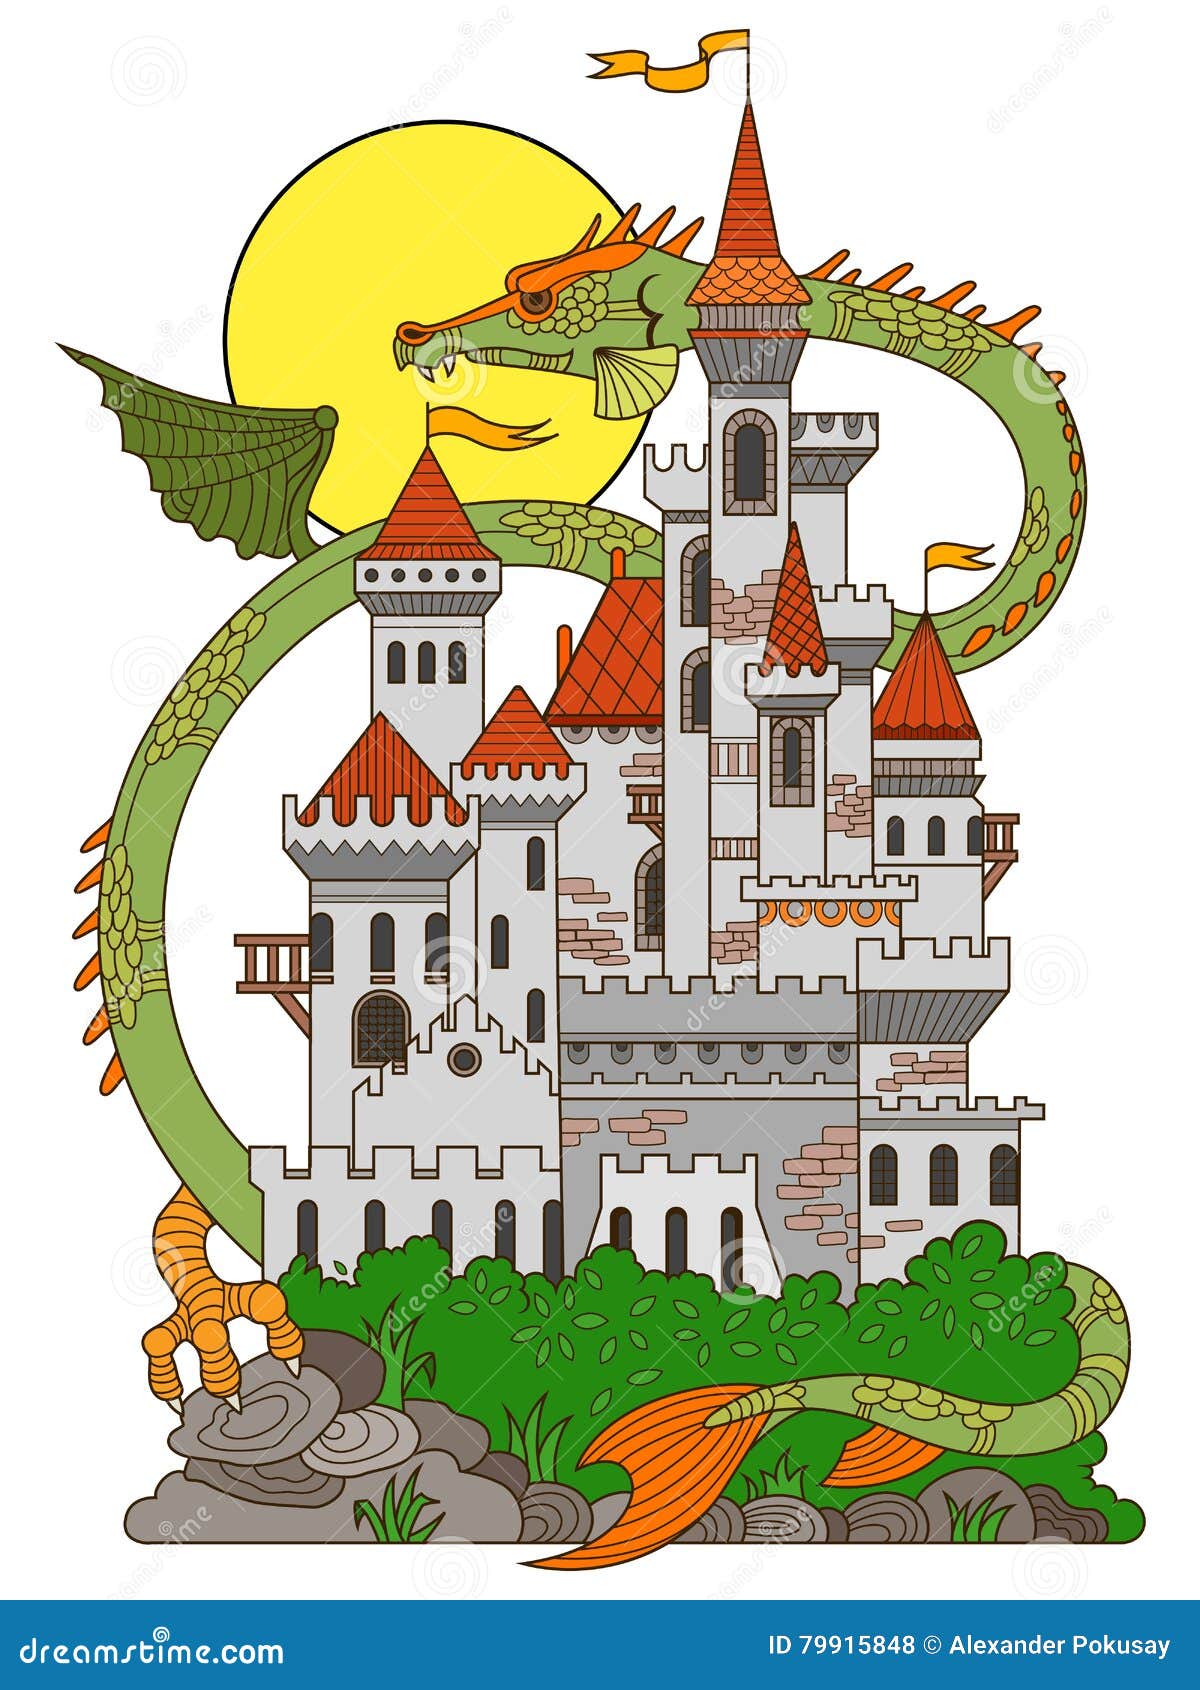 Castle Dragon Cartoon Stock Illustrations 1 780 Castle Dragon Cartoon Stock Illustrations Vectors Clipart Dreamstime